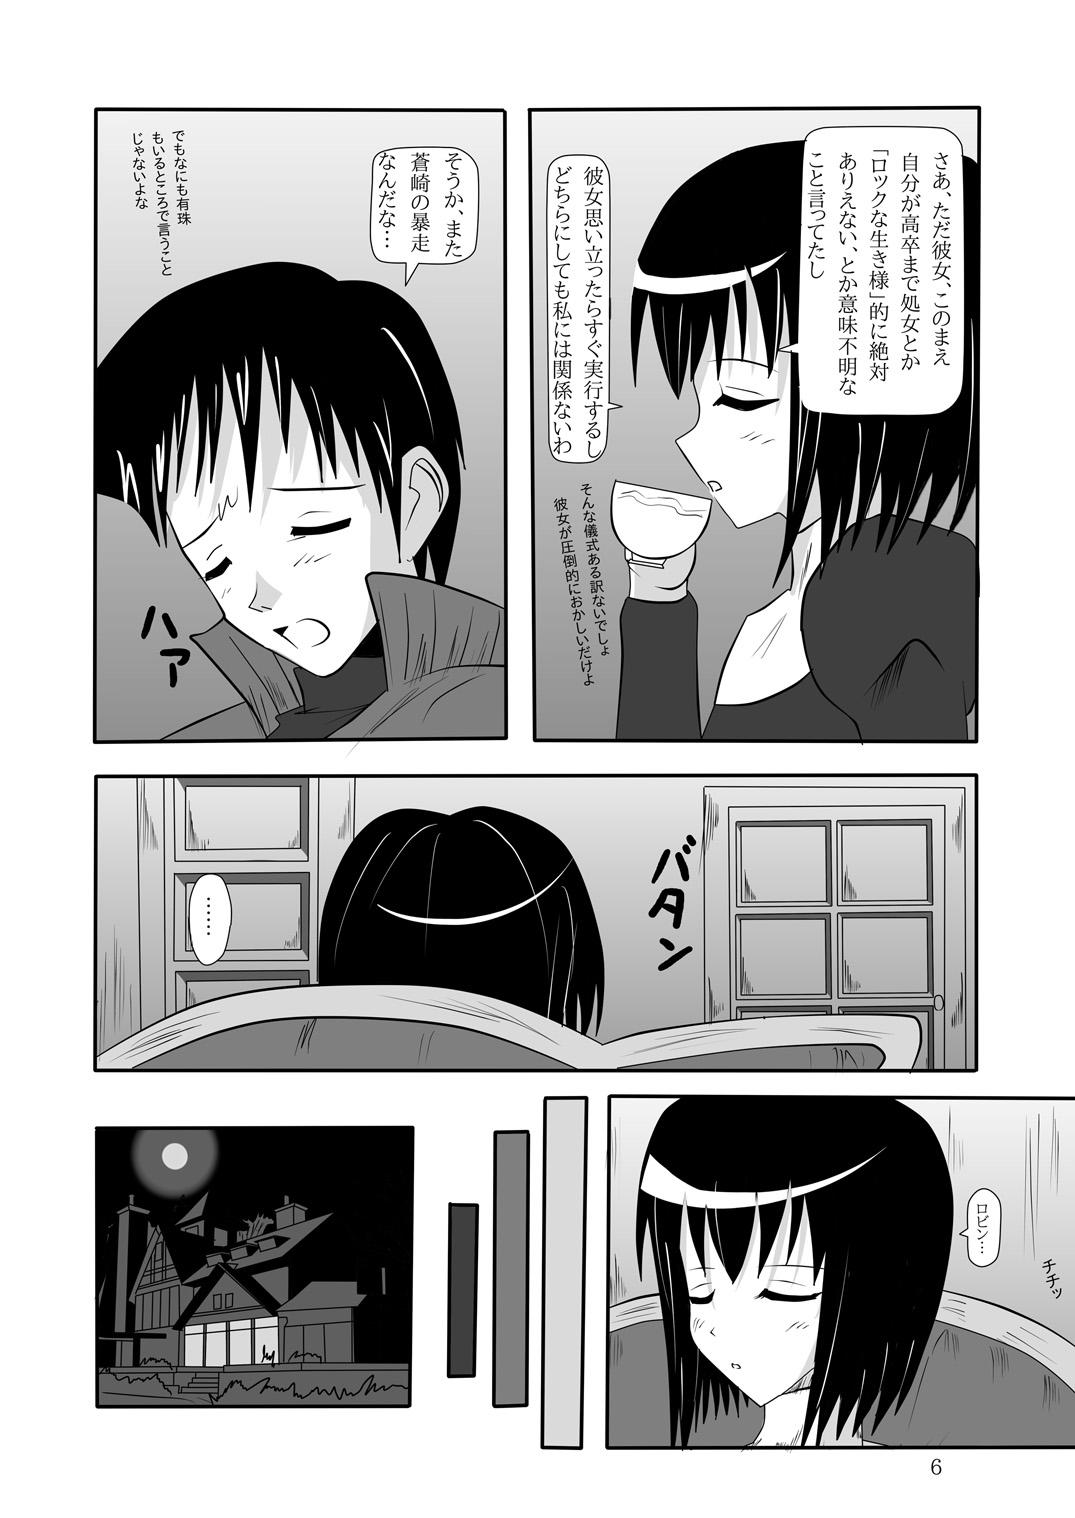 Webcam smells like teen spirit - Mahou tsukai no yoru | witch on the holy night This - Page 7